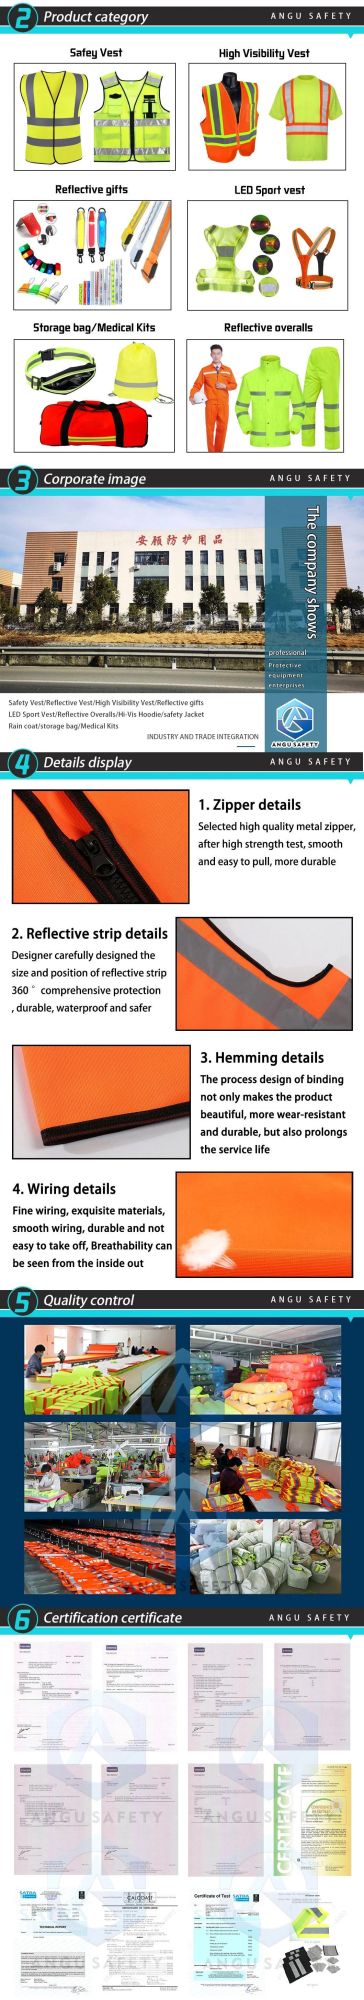 DOT Safety Roadside Reflector Emergency Triangle Kit Warning Triangle